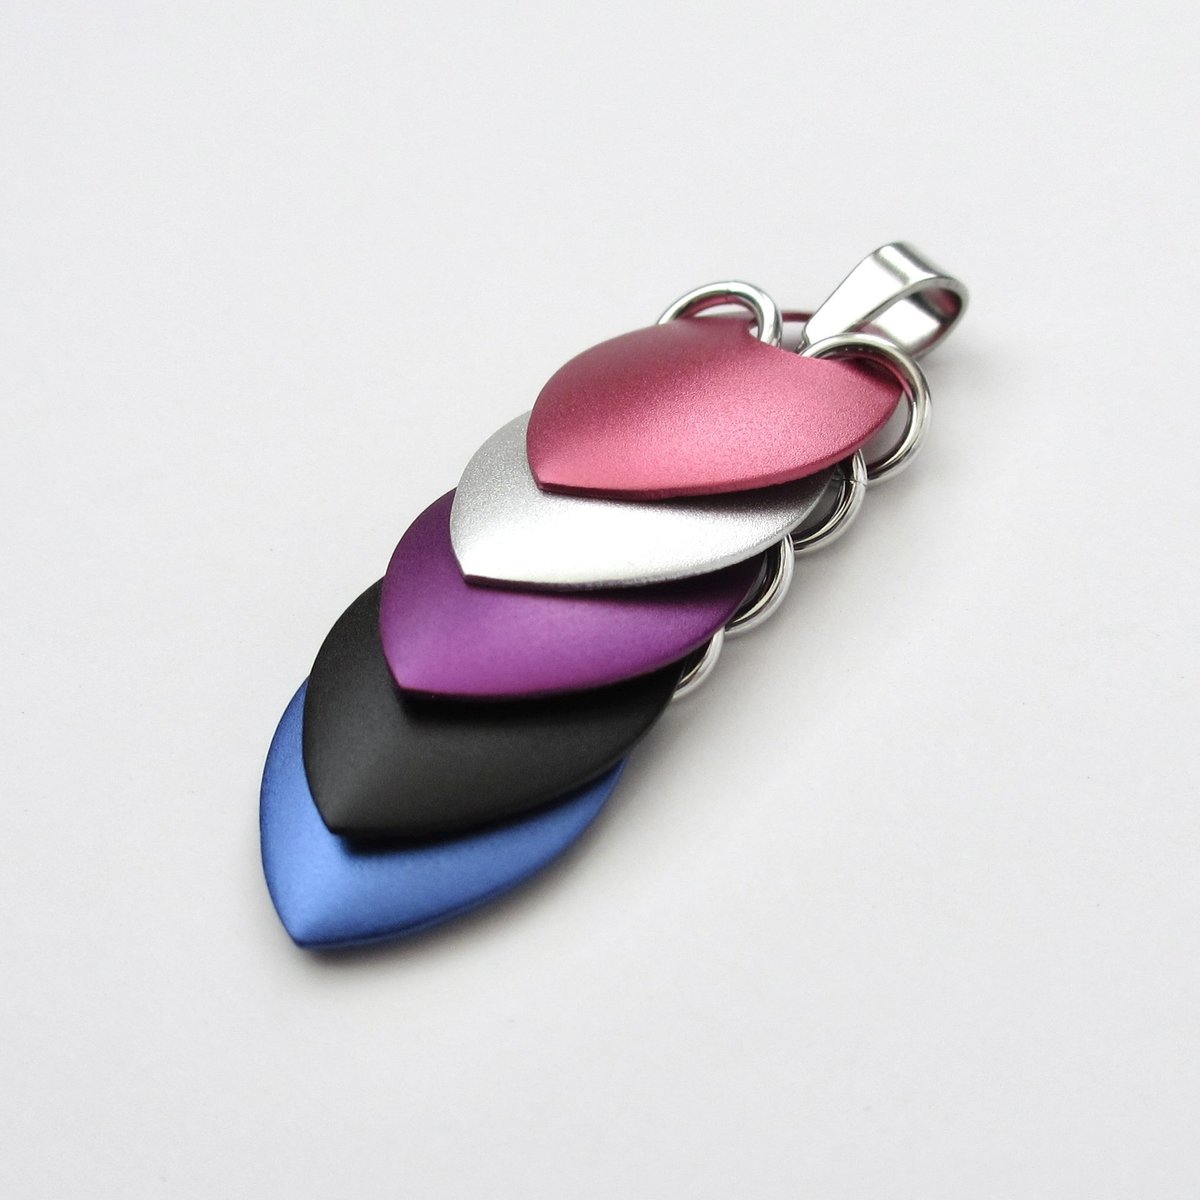 Genderfluid pride pendant, chainmail scales necklace